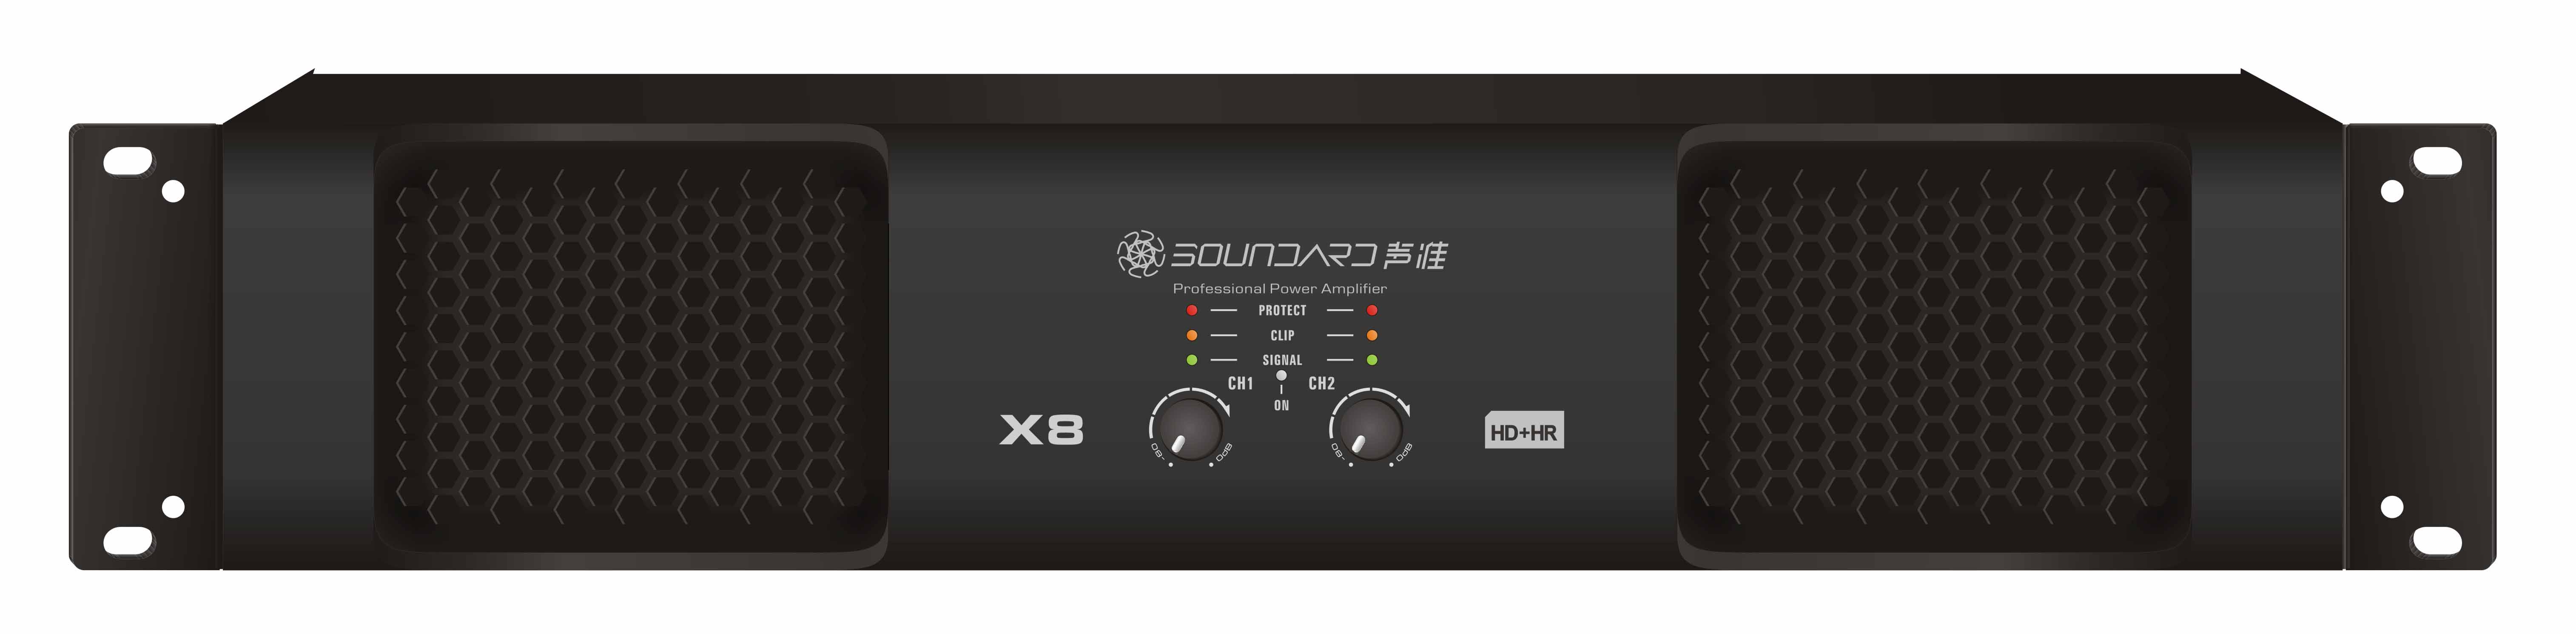 Soundard ca20 series user's manual